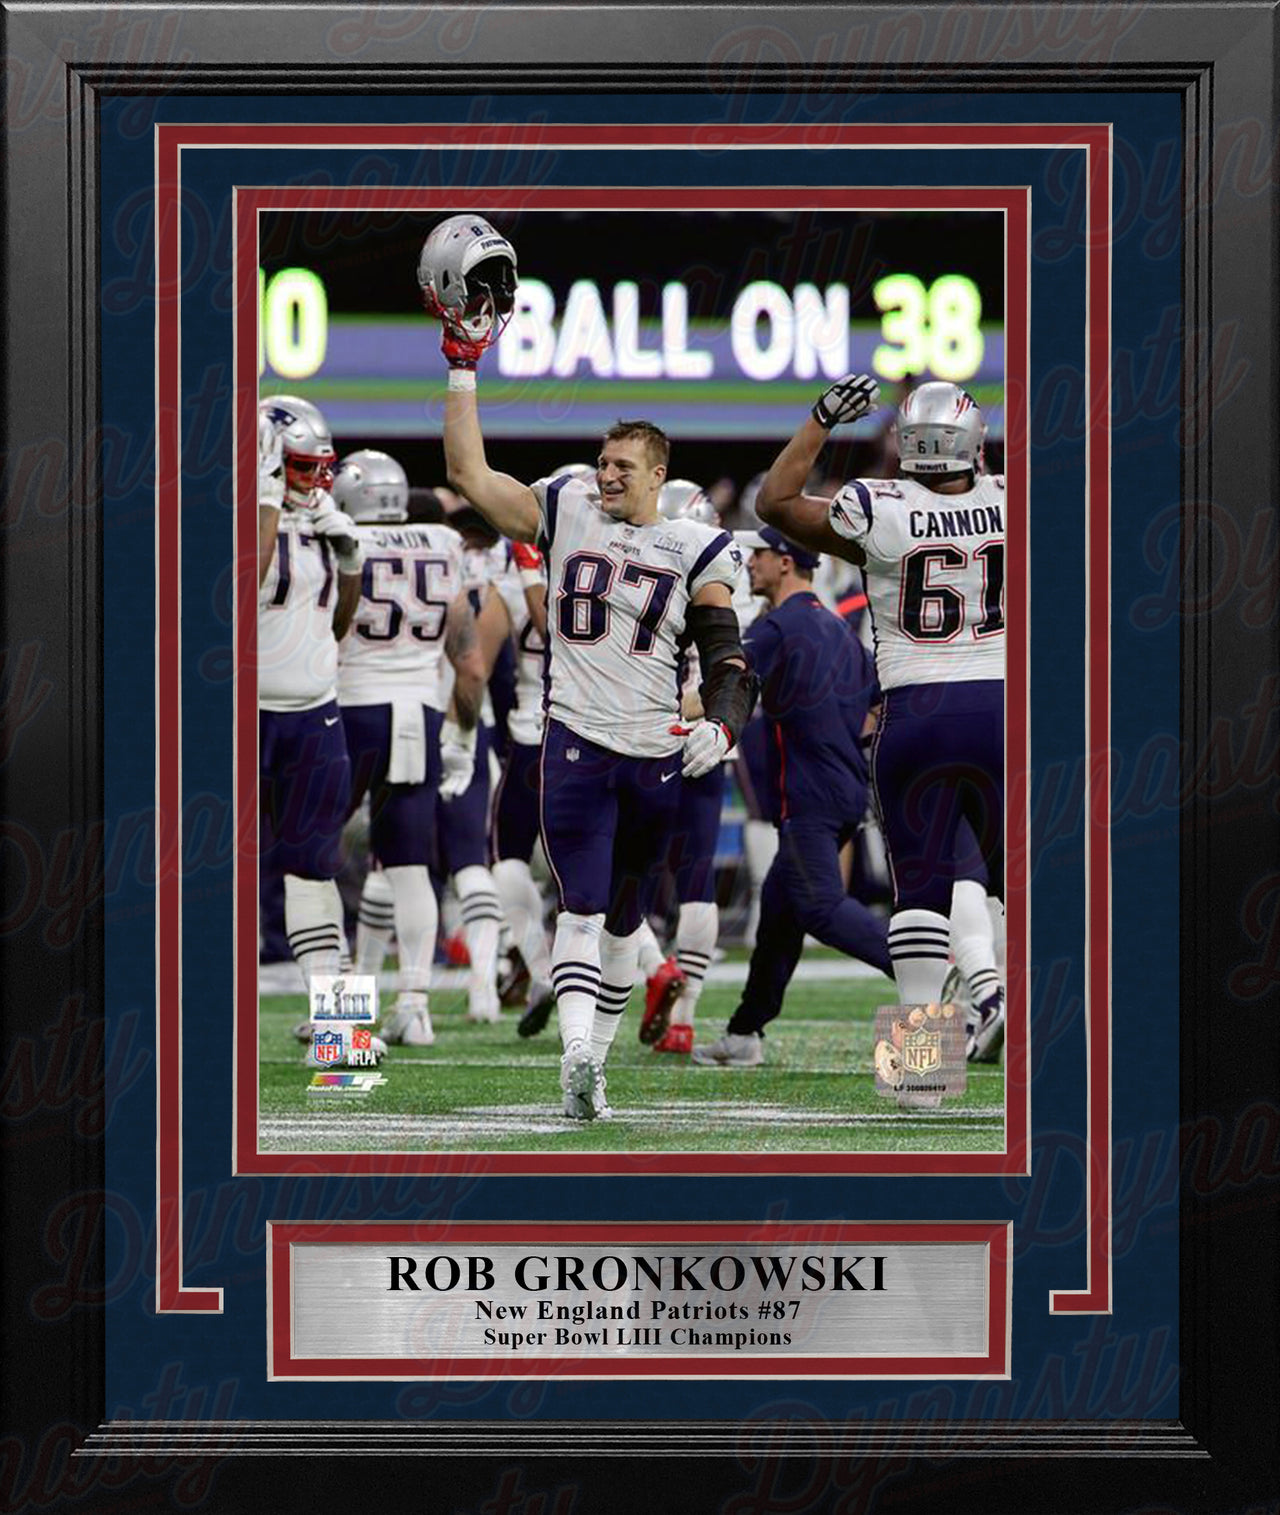 Rob Gronkowski Super Bowl LIII Celebration New England Patriots 8" x 10" Framed Football Photo - Dynasty Sports & Framing 